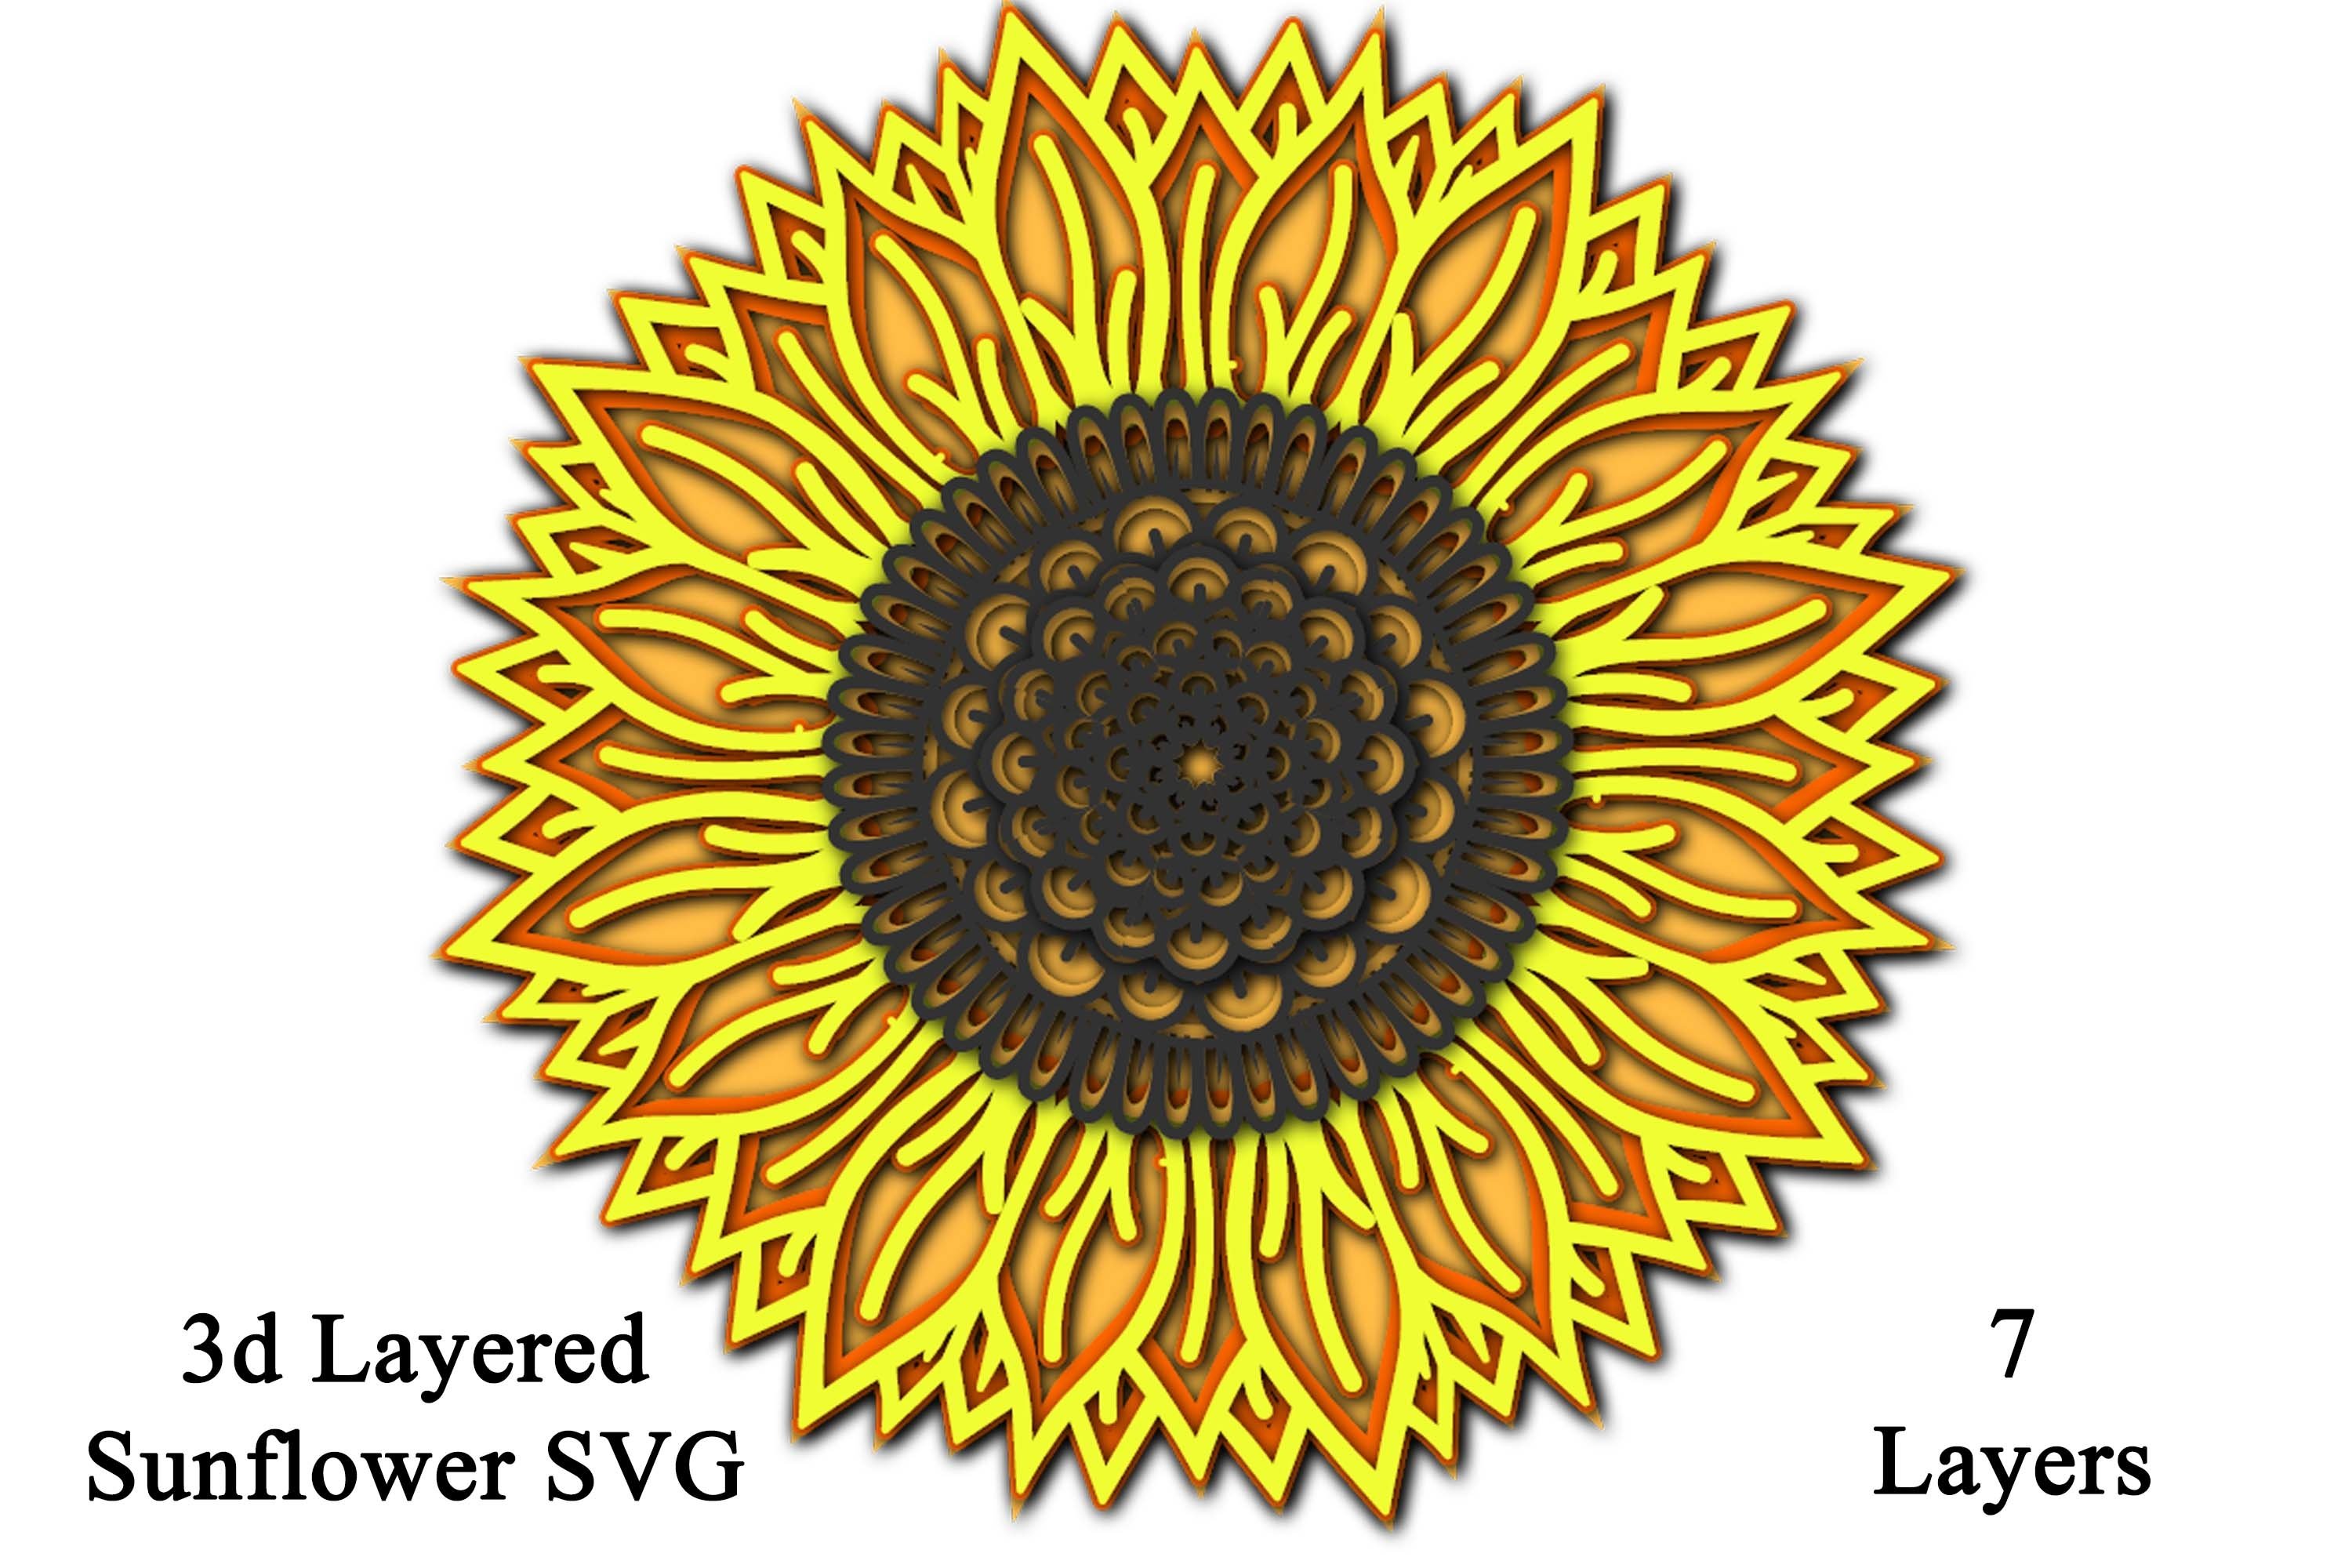 Sunflower 3D Layered Sunflower SVG - 7 Layers (617095) | Paper Cutting